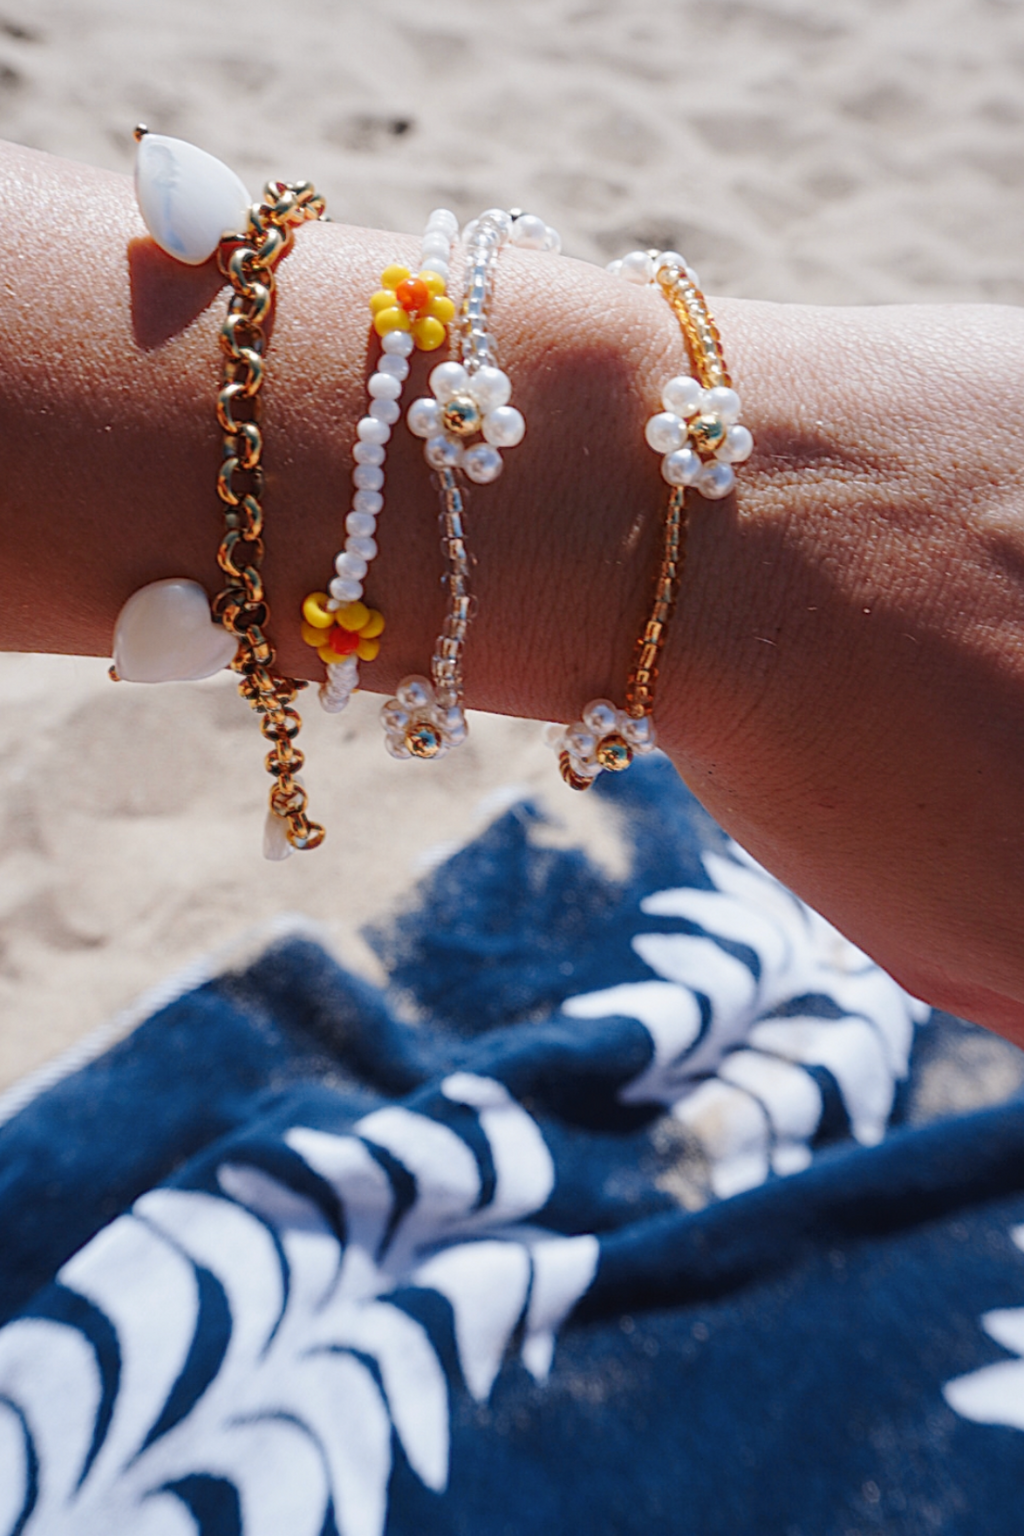 Bohemian Daisy Sunflower Bracelet With Adjustable Rope Chain Pendant Charm  For Women Handmade Summer Beach Boho Jewelry 2020 From Sleepybunny, $0.68 |  DHgate.Com